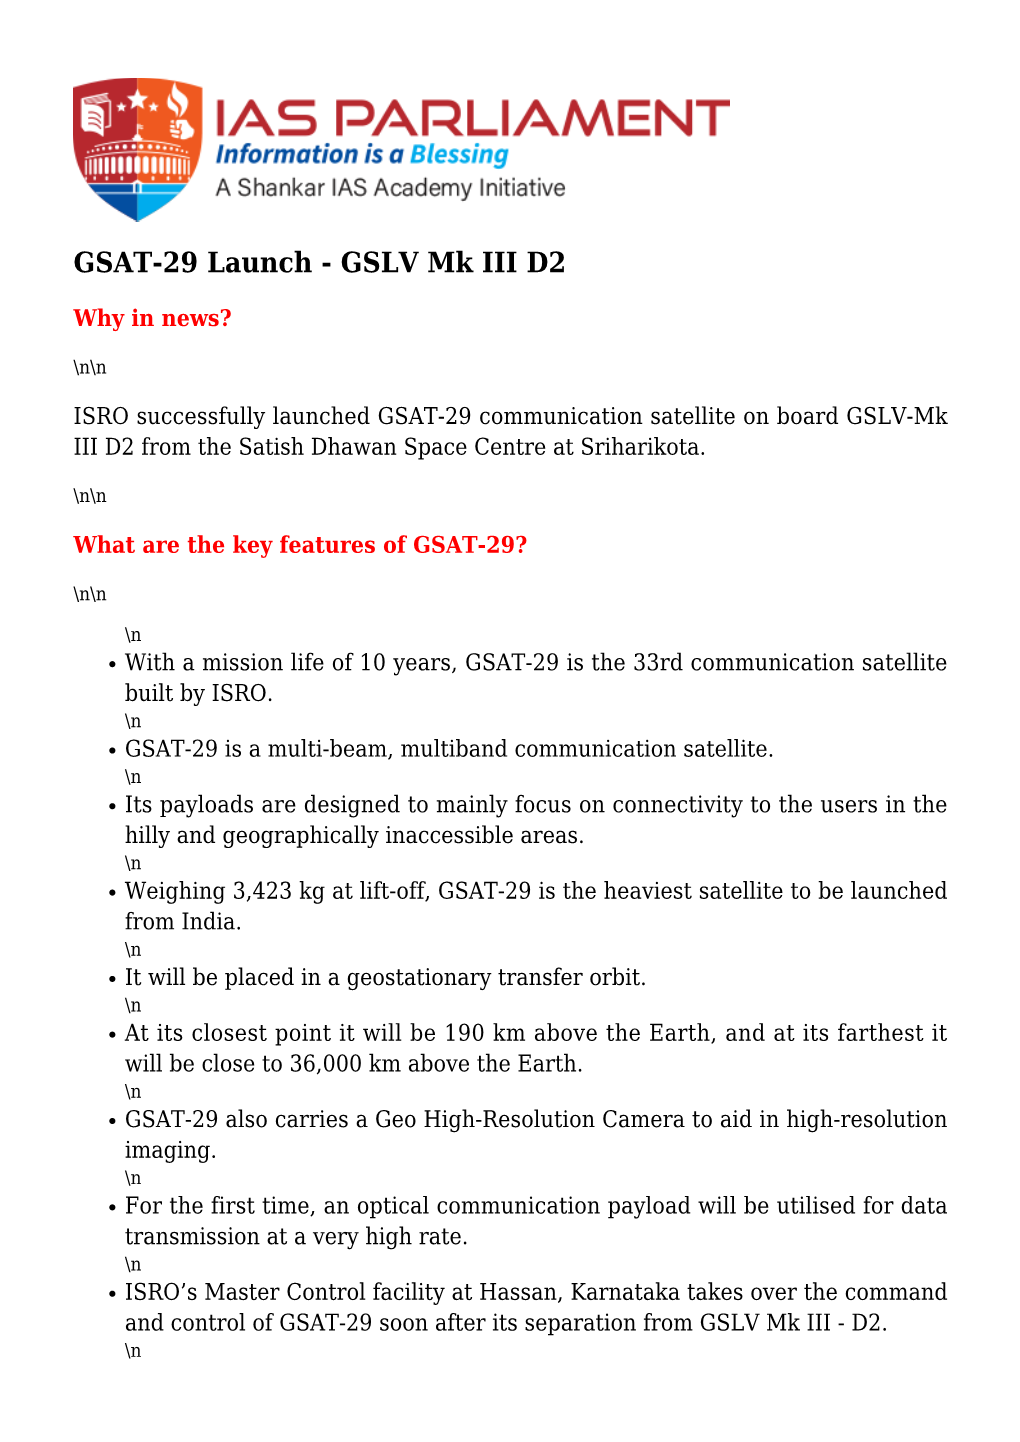 GSAT-29 Launch - GSLV Mk III D2